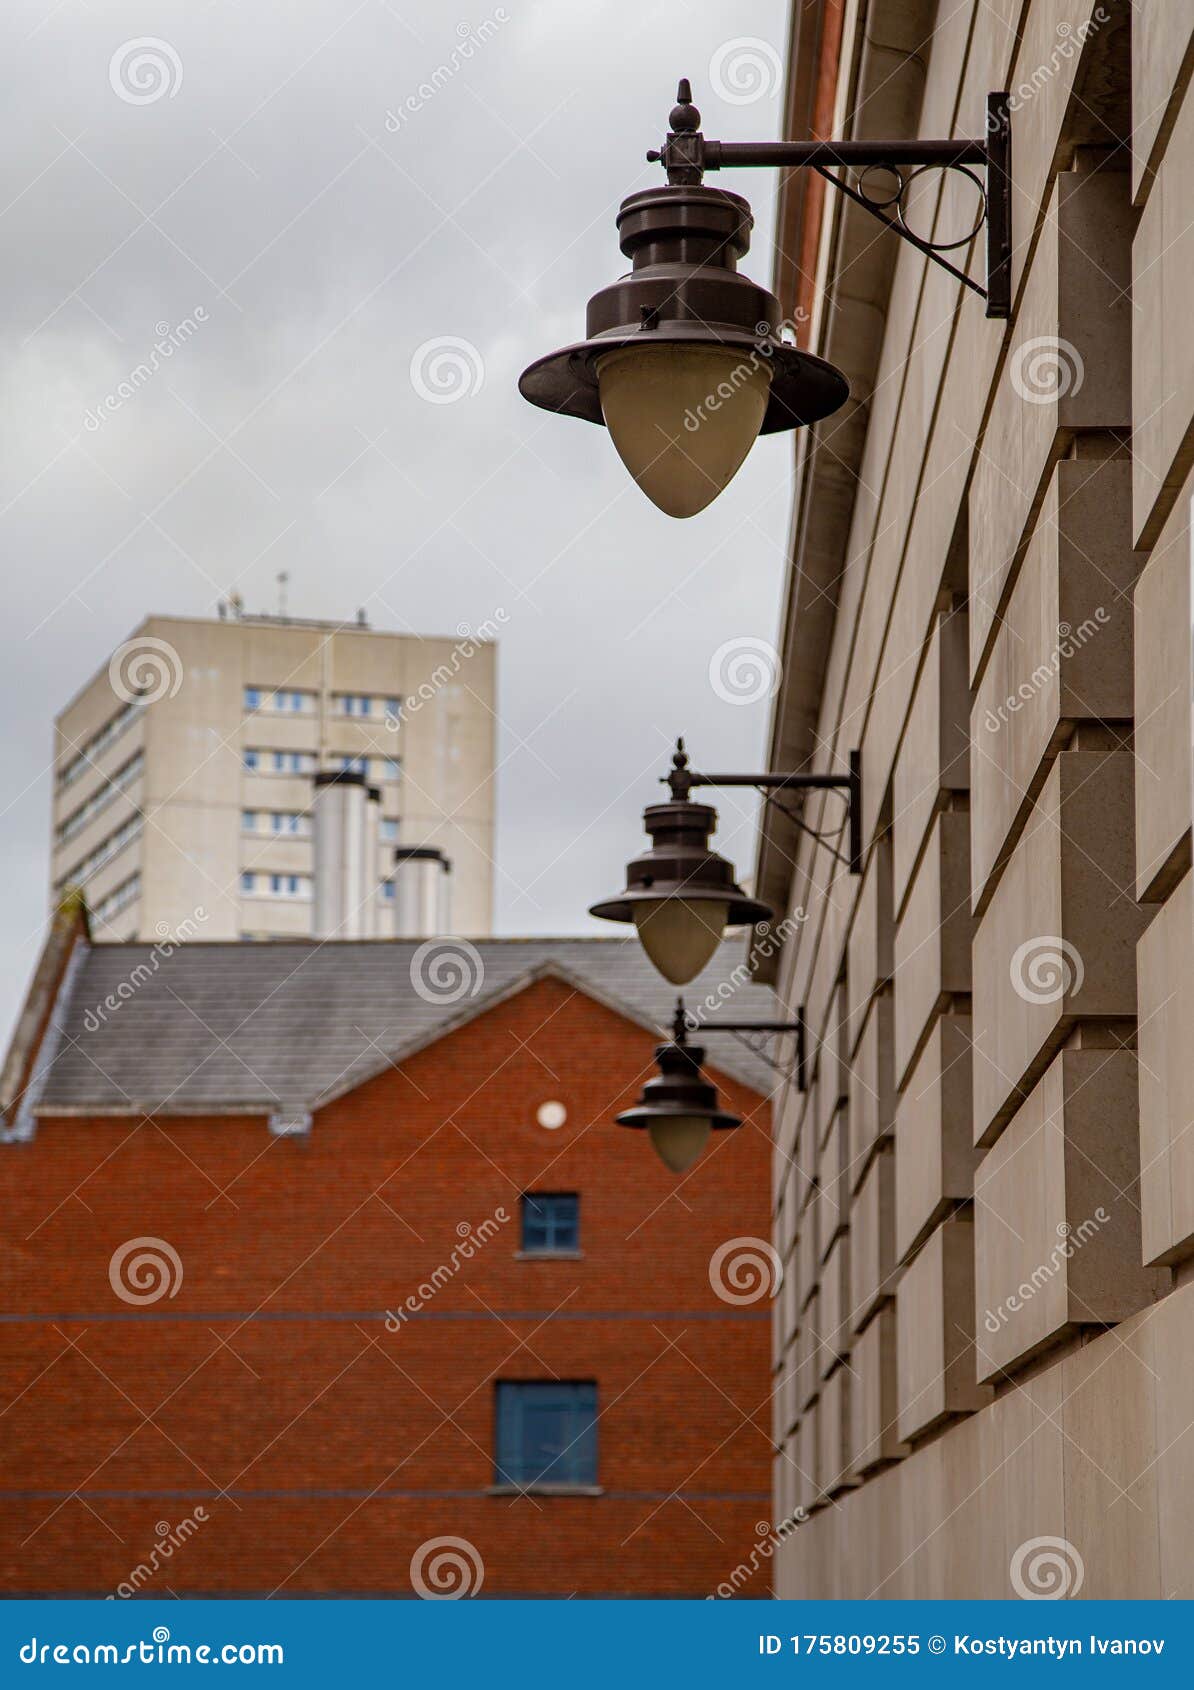 lanterns on the building in birmingham